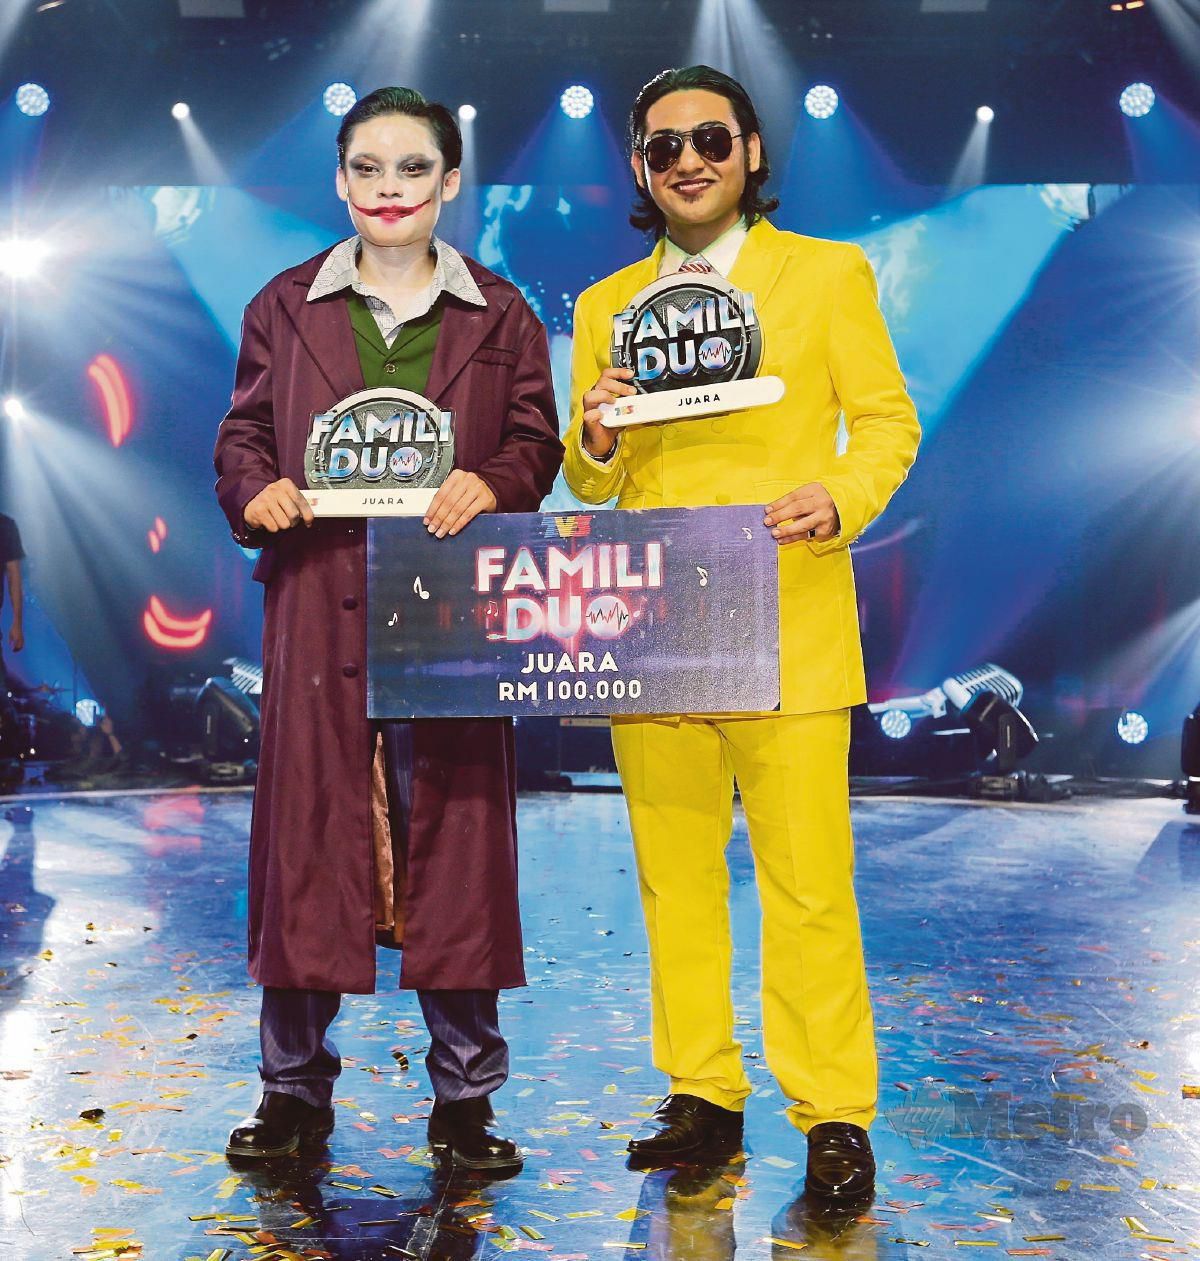 YAMANI dan adiknya, Zaki dinobatkan sebagai juara program Famili Duo musim kedua.